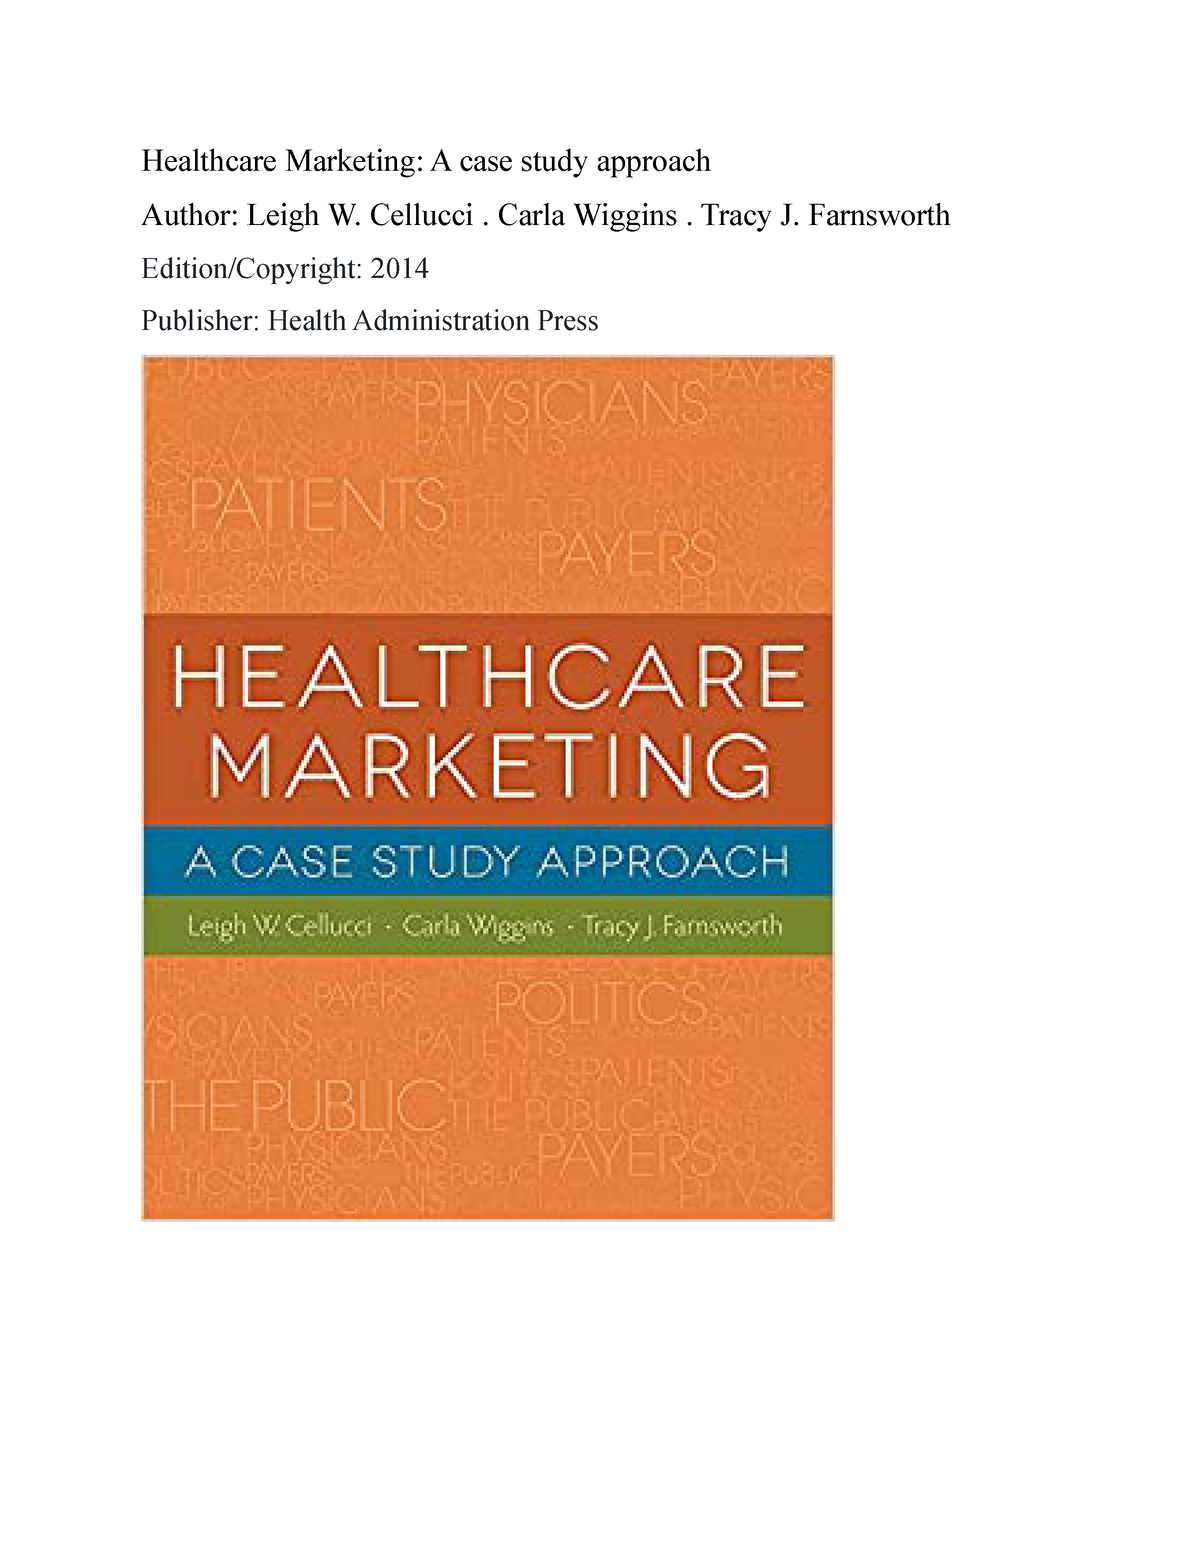 marketing case study healthcare